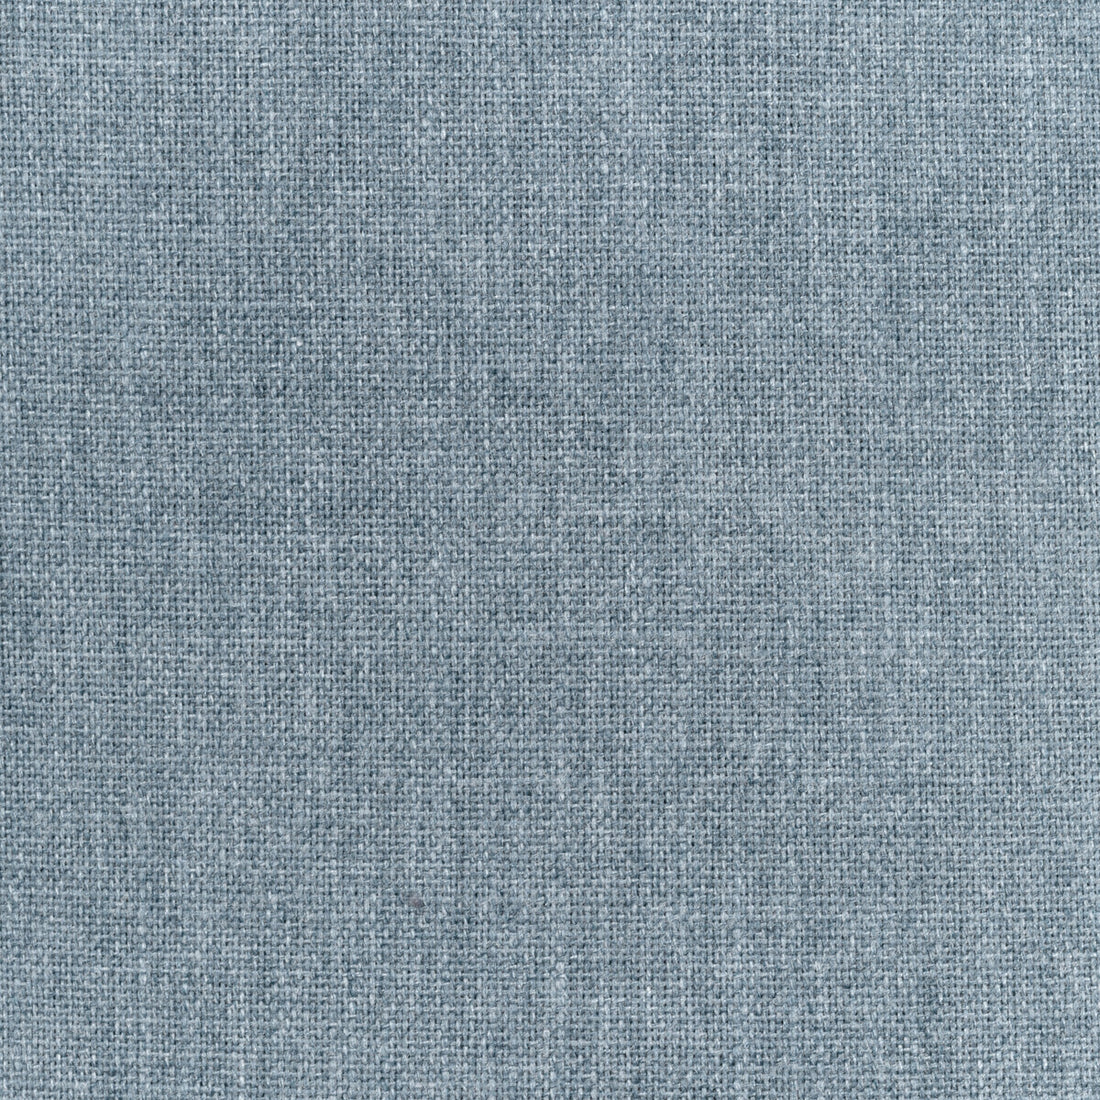 Kravet Smart fabric in 36112-1521 color - pattern 36112.1521.0 - by Kravet Smart in the Performance Kravetarmor collection